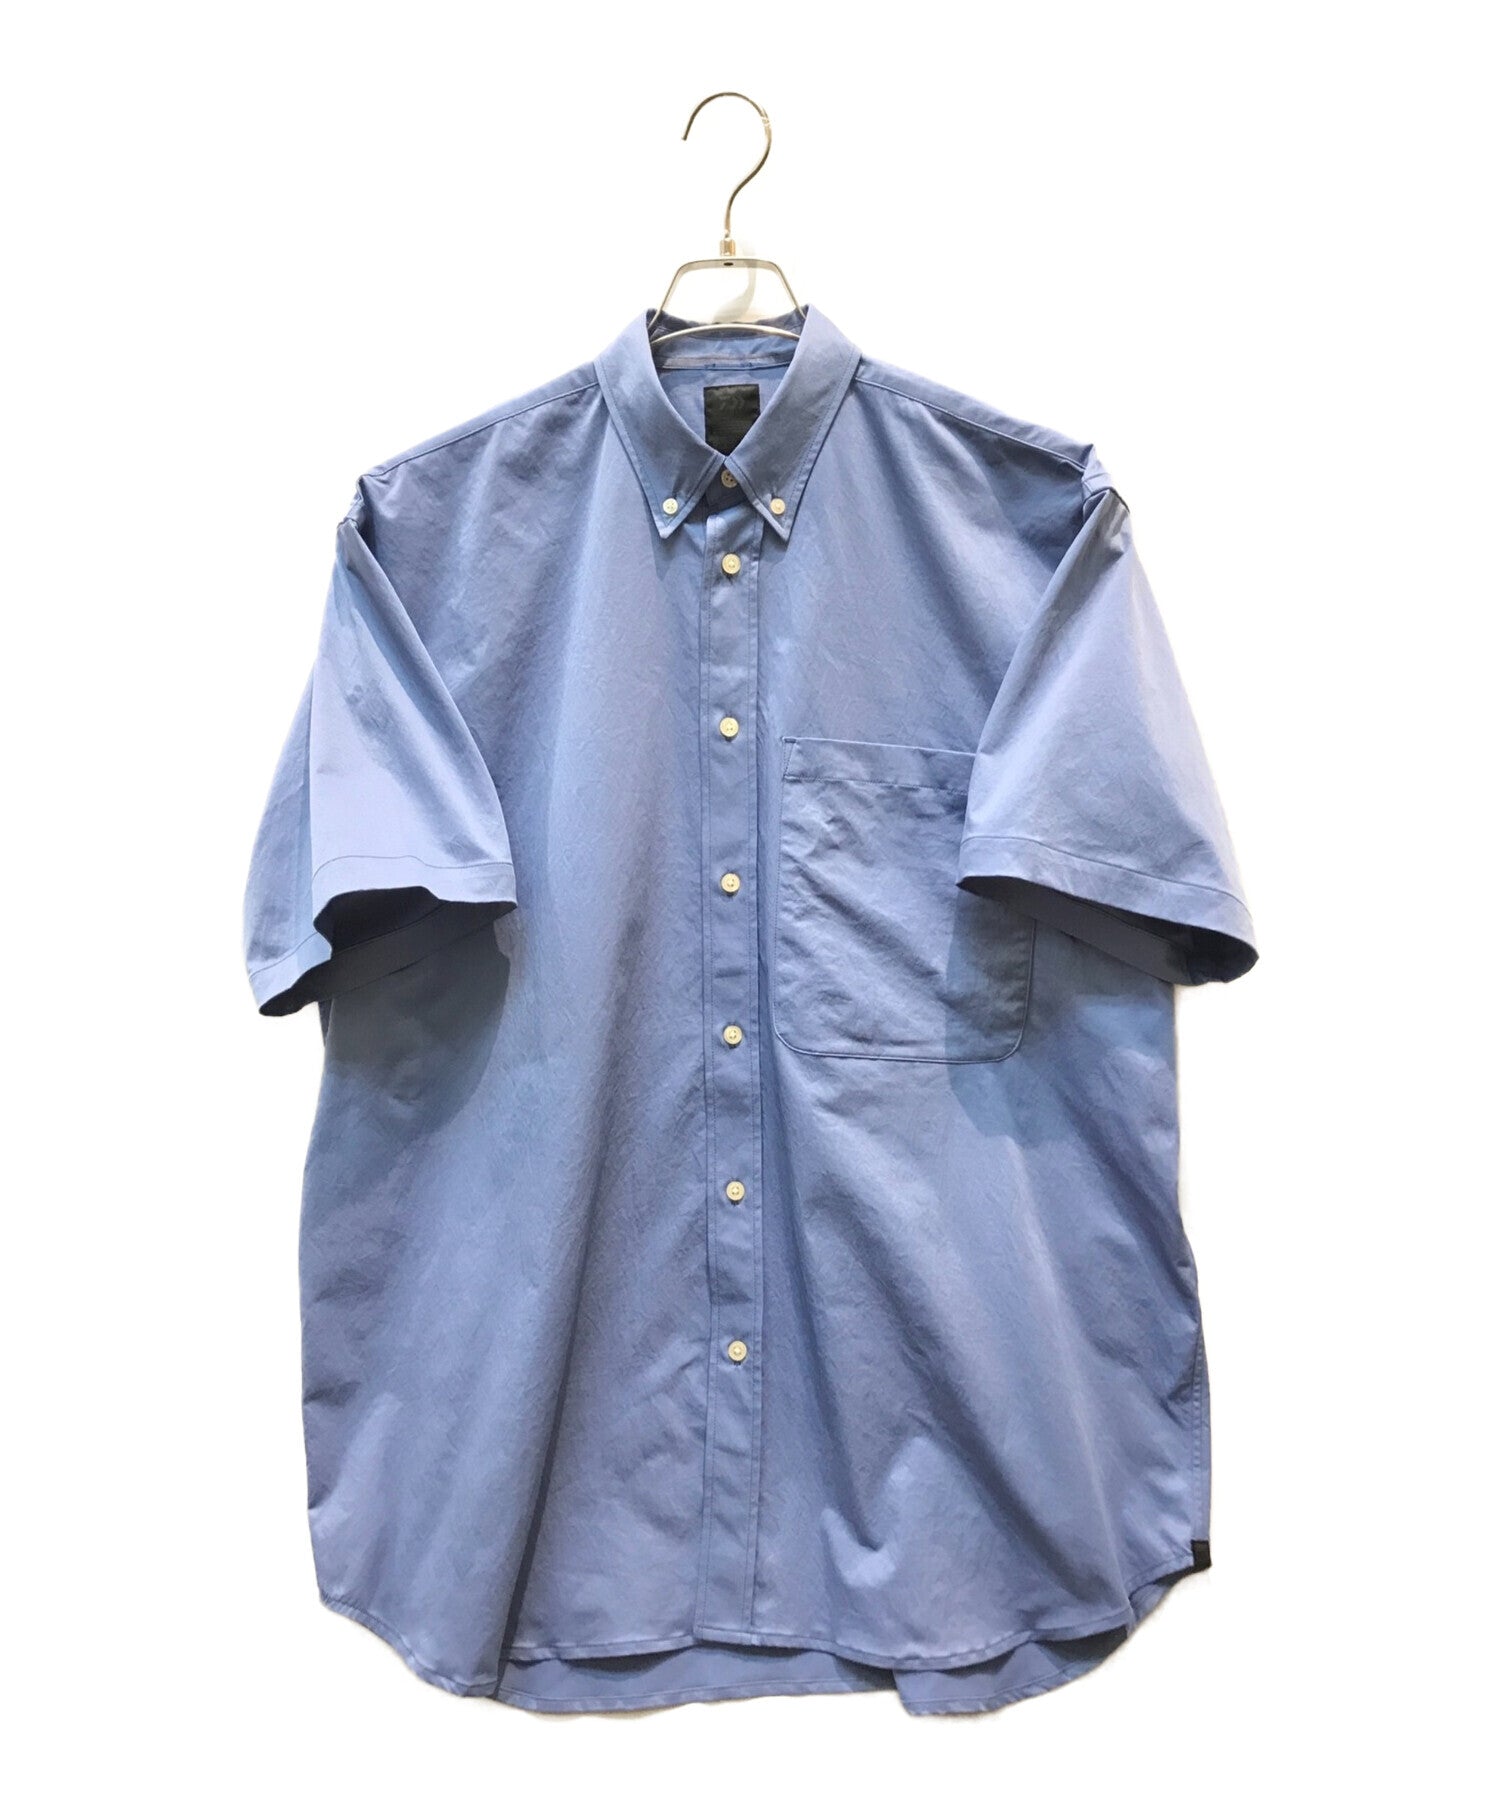 DAIWA PIER39 short-sleeved shirt BE-83022 | Archive Factory